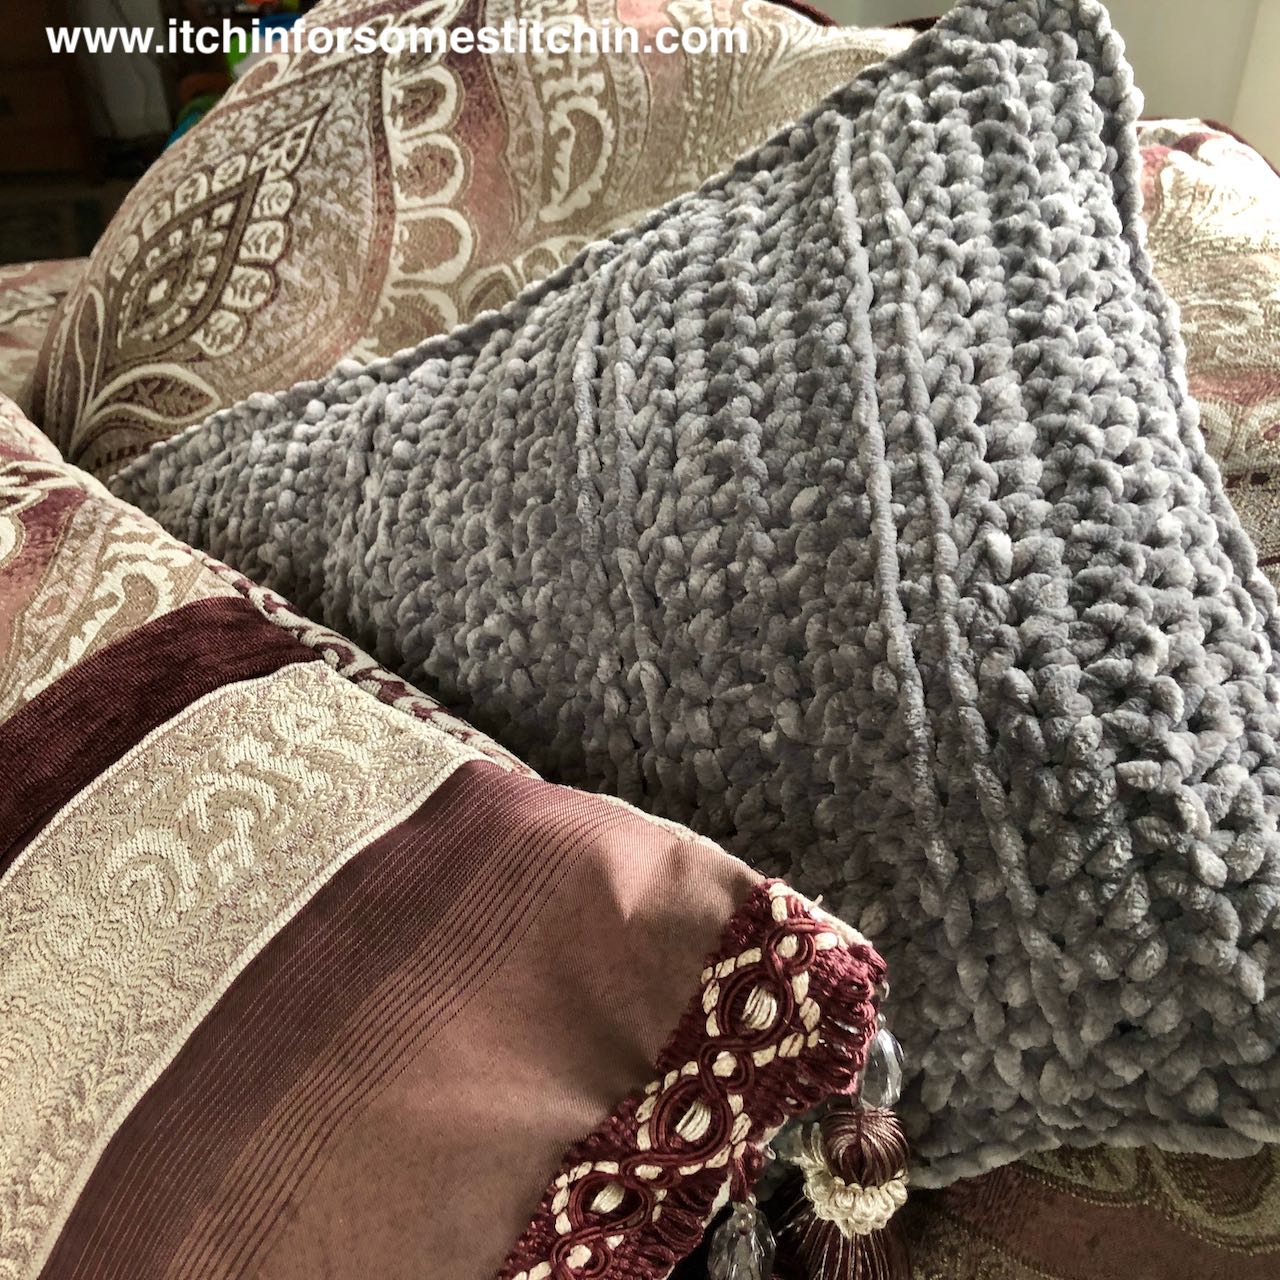 Crochet Throw Pillow Pattern by www.itchinforsomestitchin.com